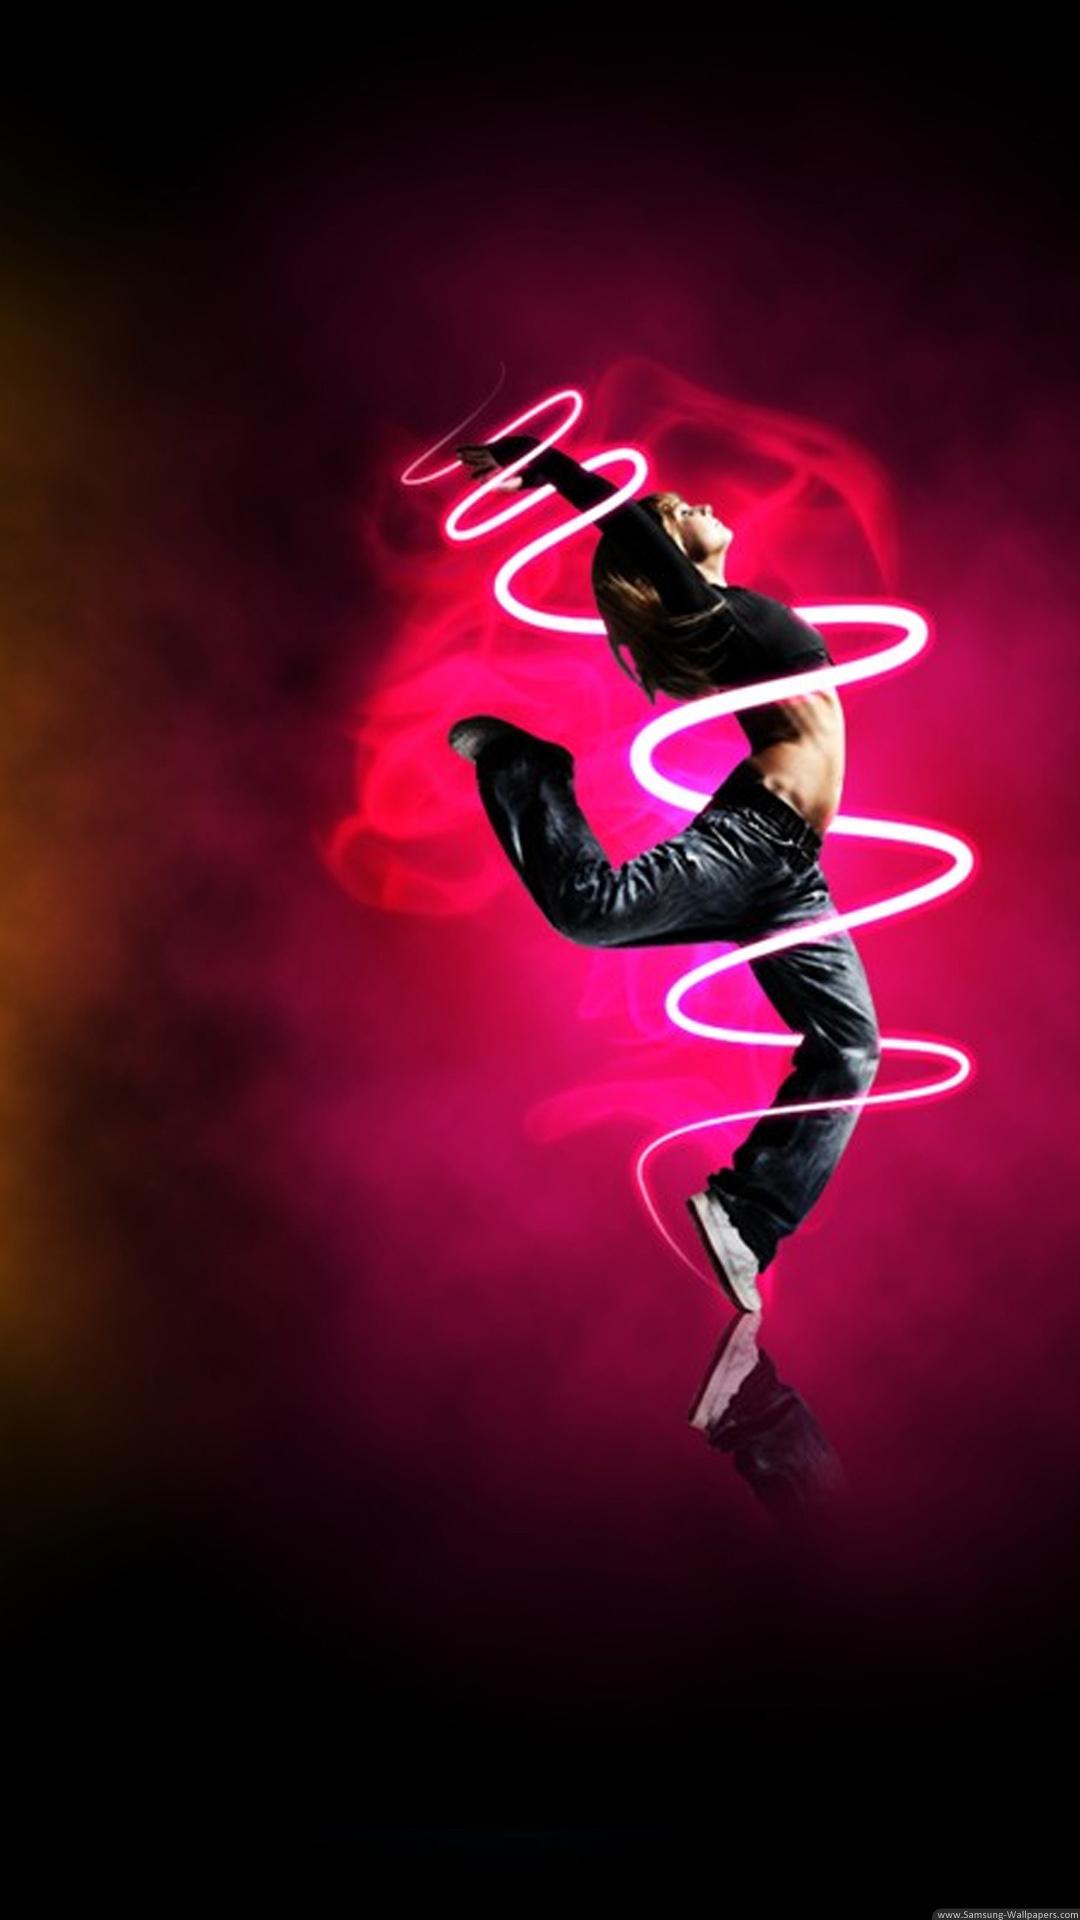 IPhone wallpaper with neon lights of a man dancing - Dance